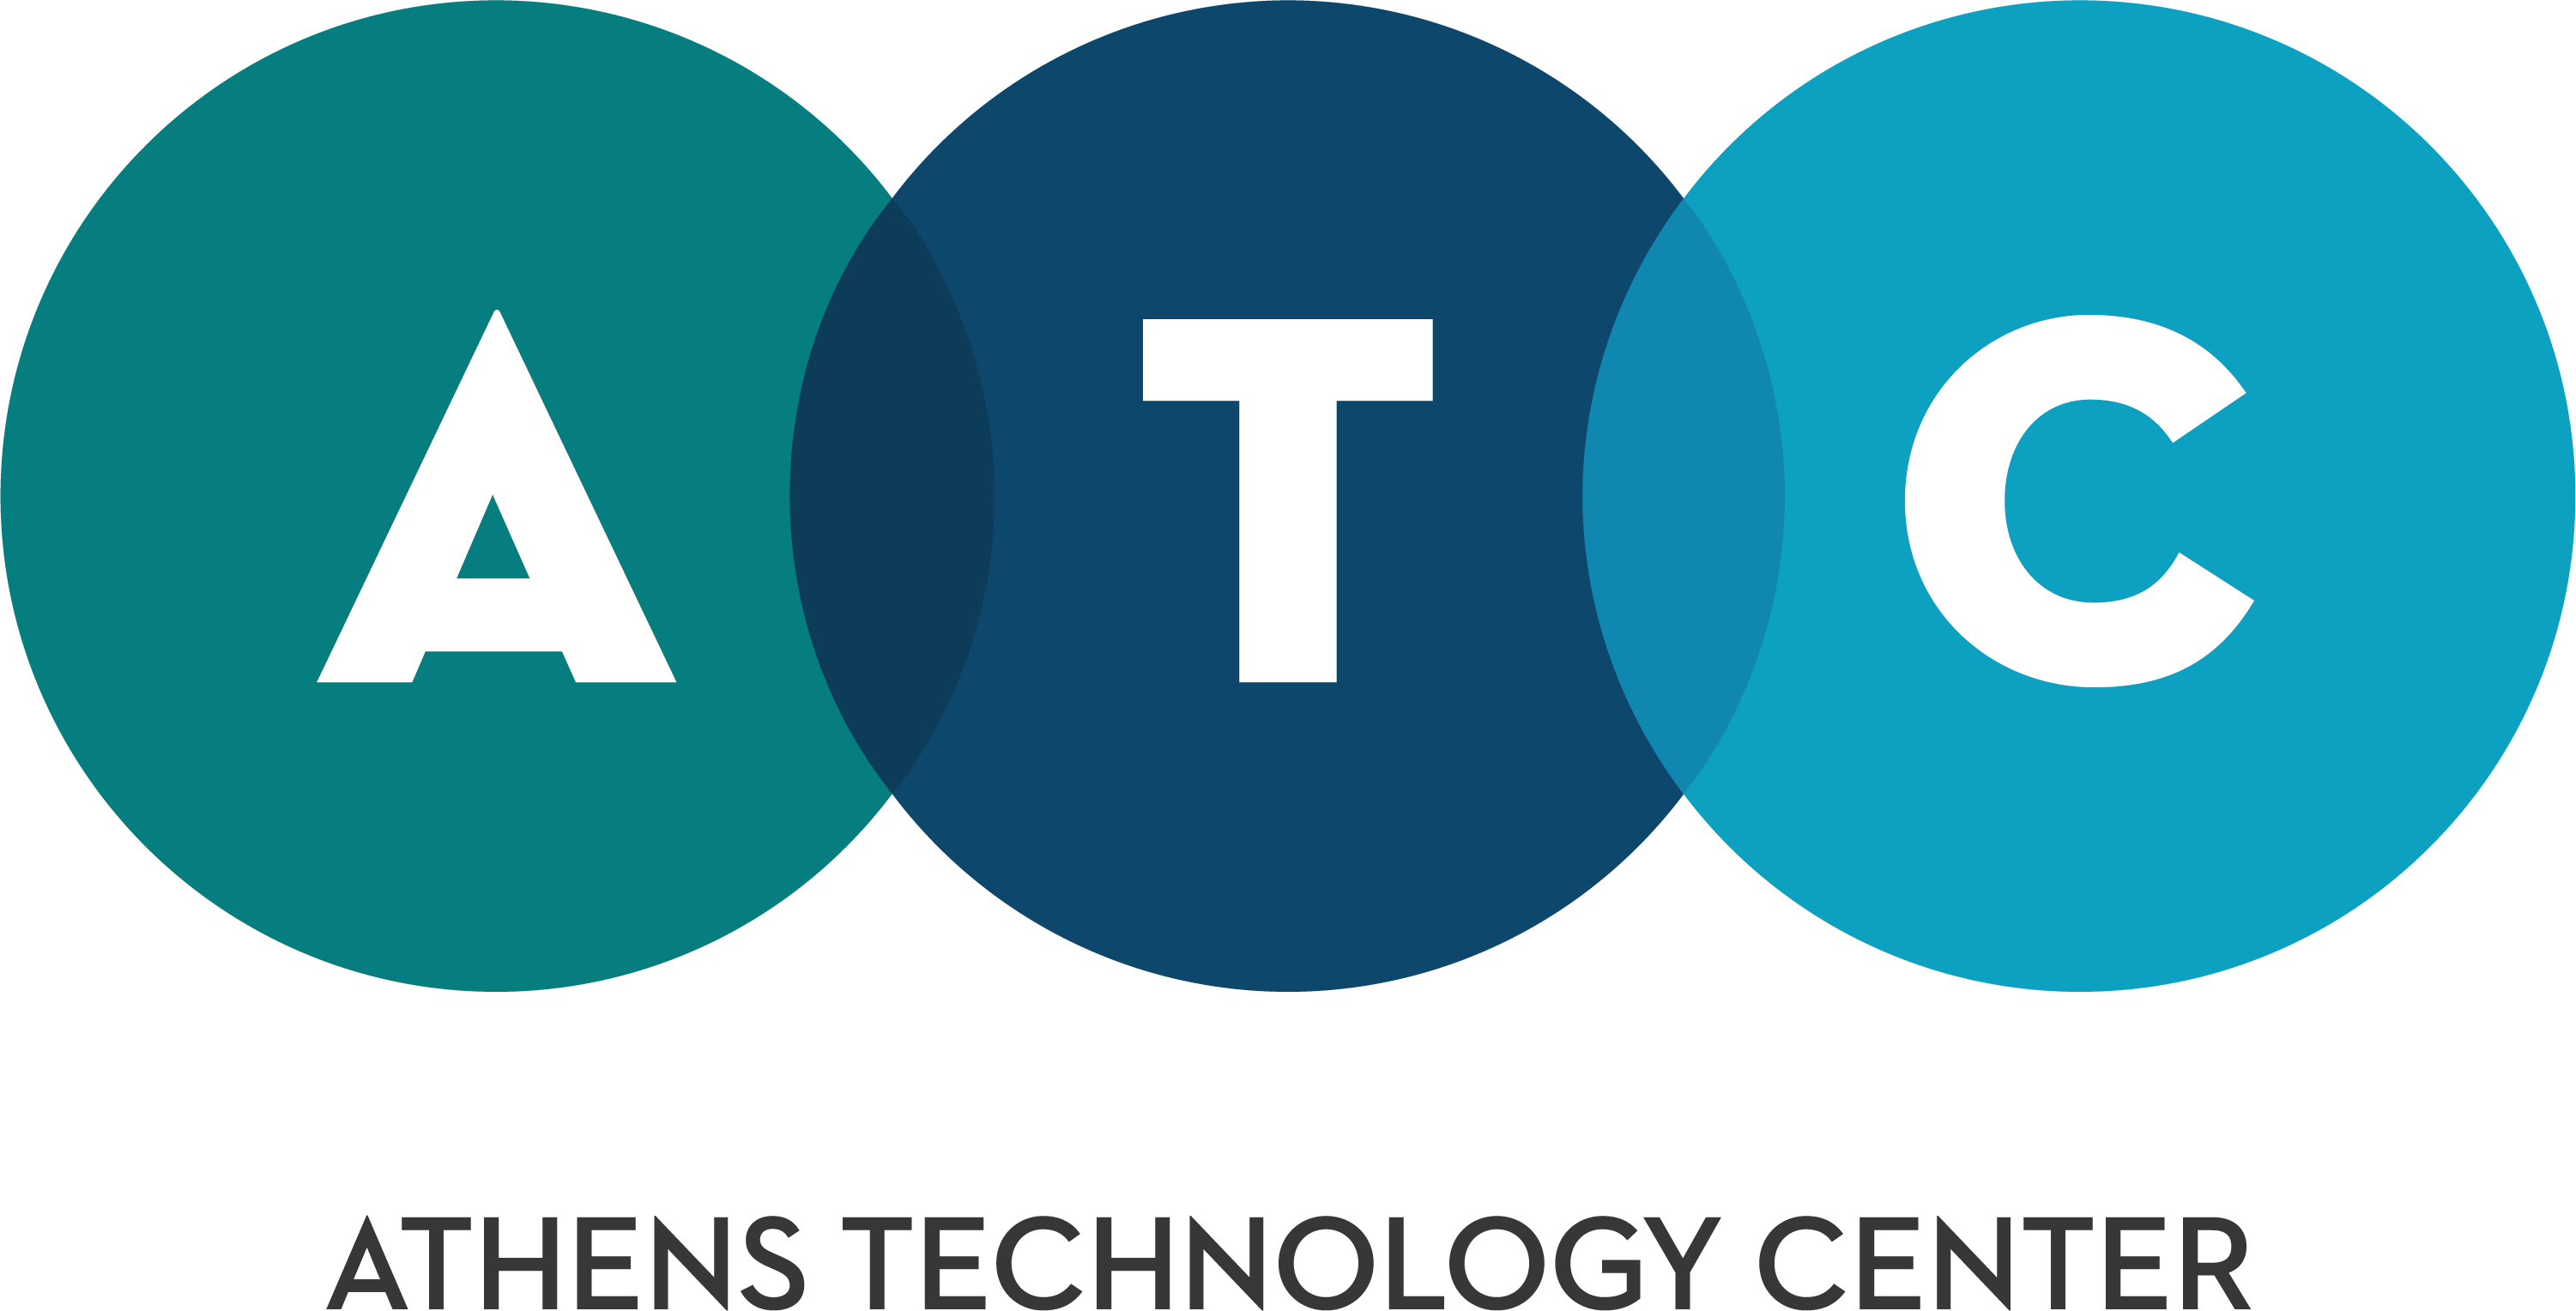 Athens Technology Center (ATC, S.A)